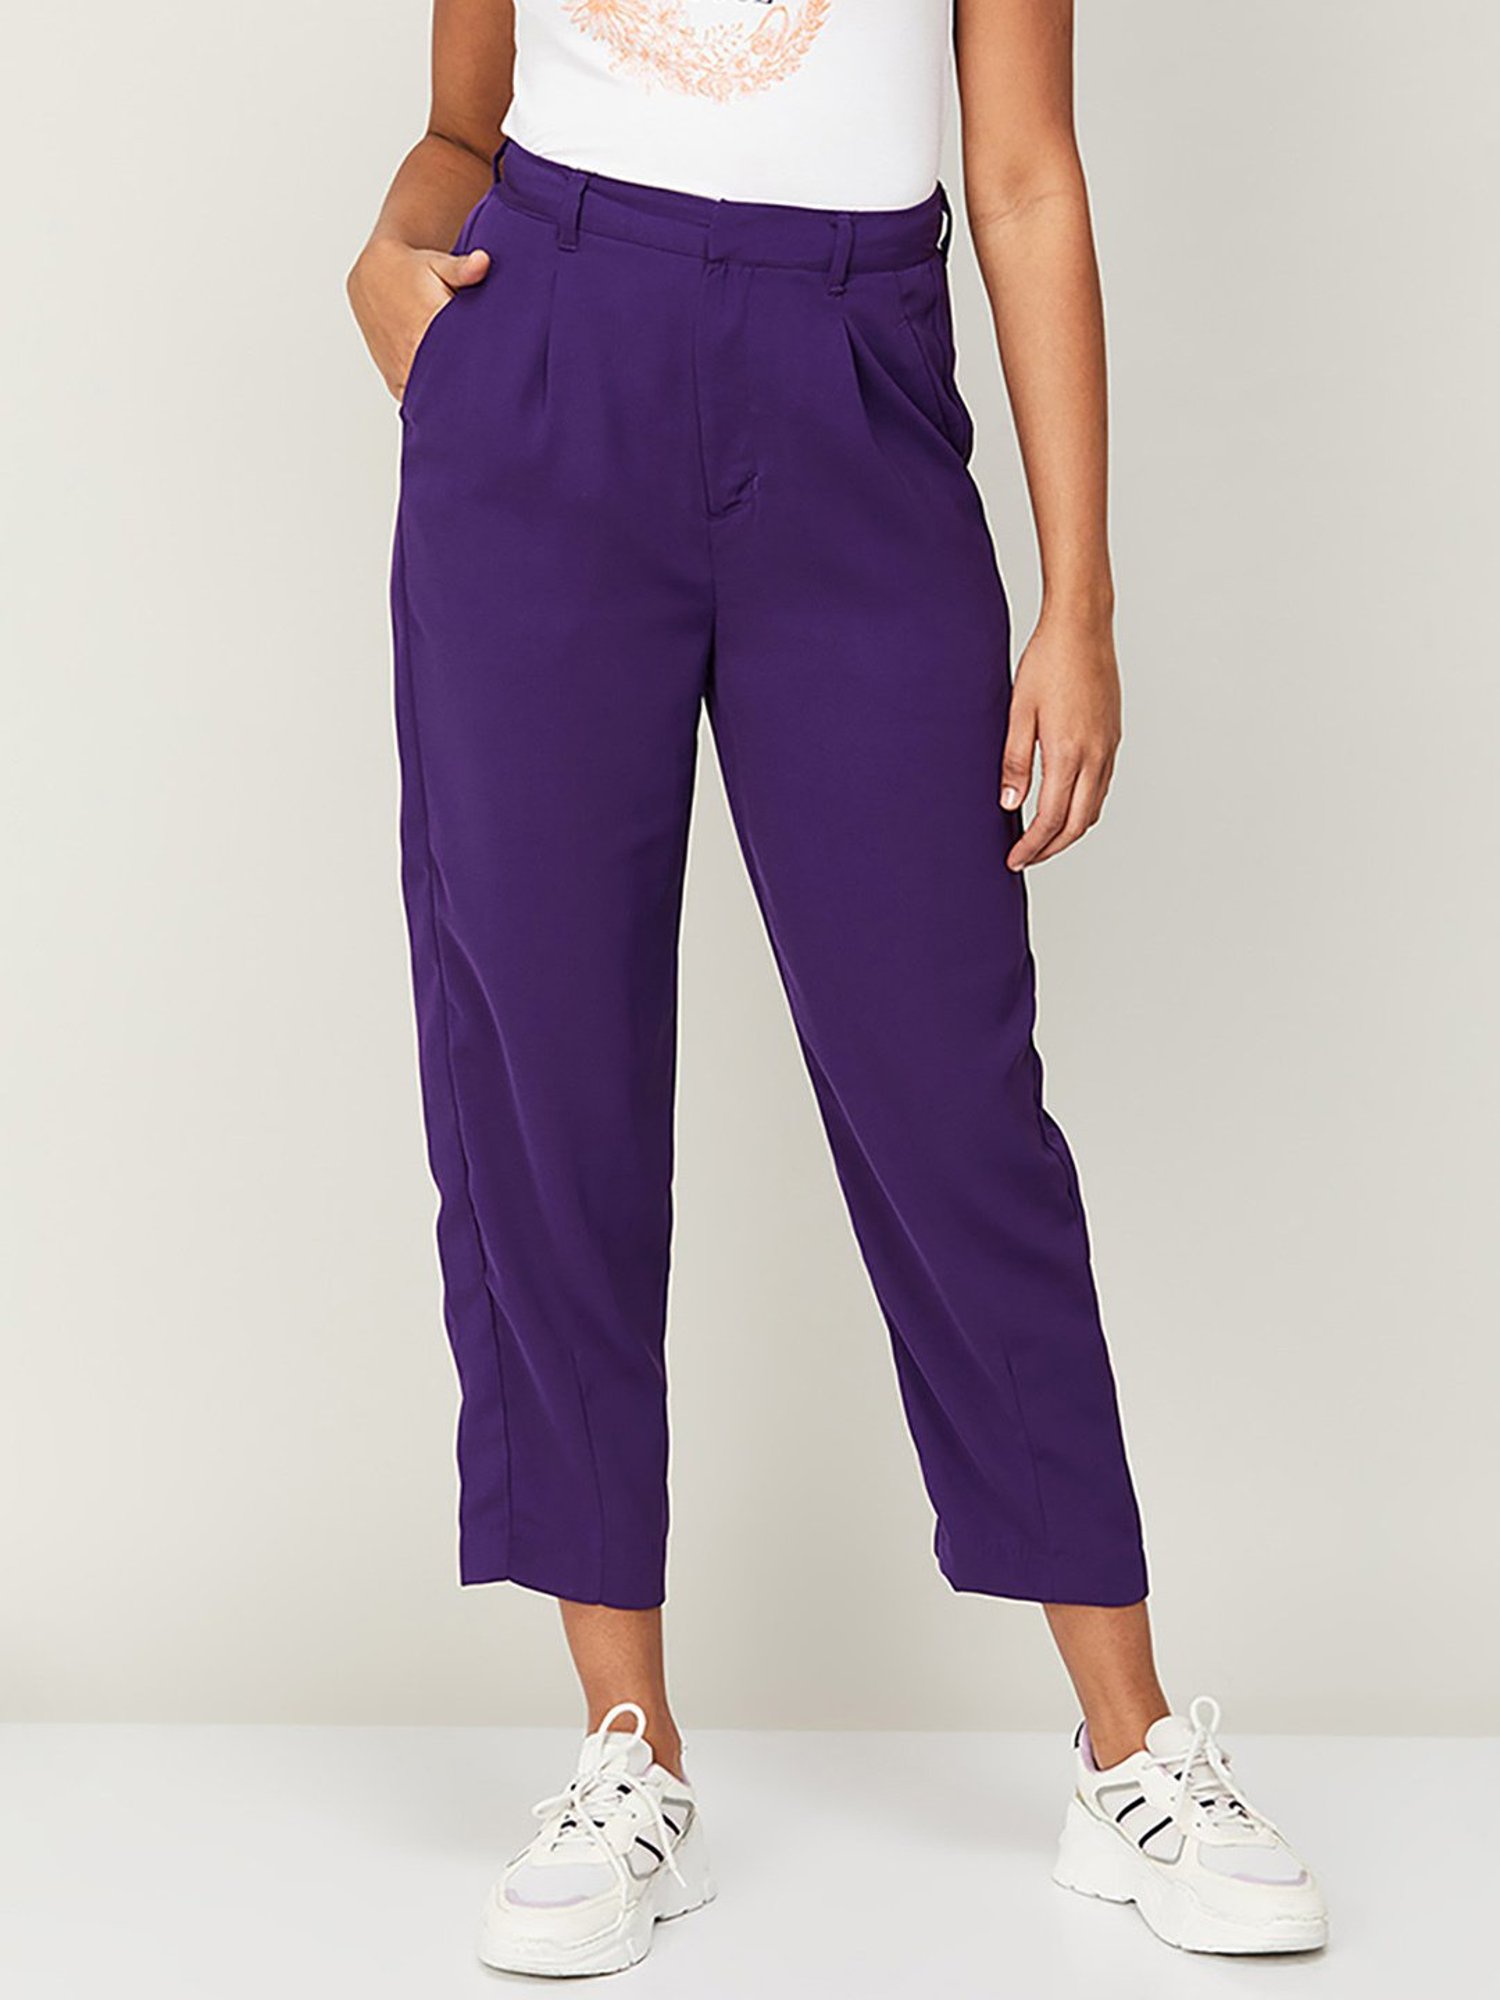 Buy Purple Trousers Online in India at Best Price  Westside